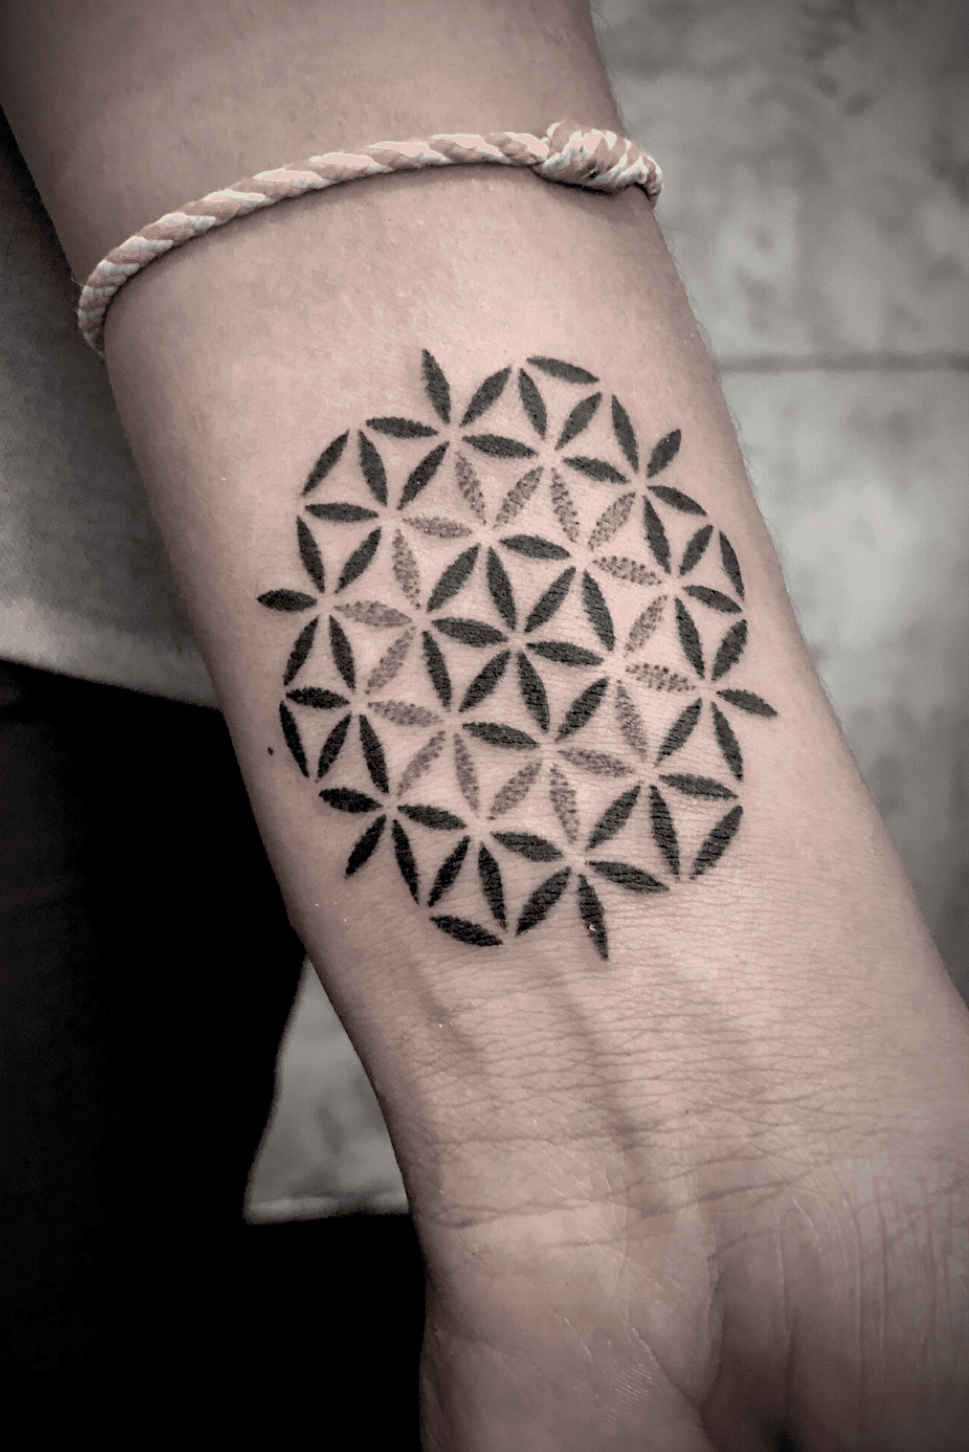 Flower of life tattoo on the inner forearm